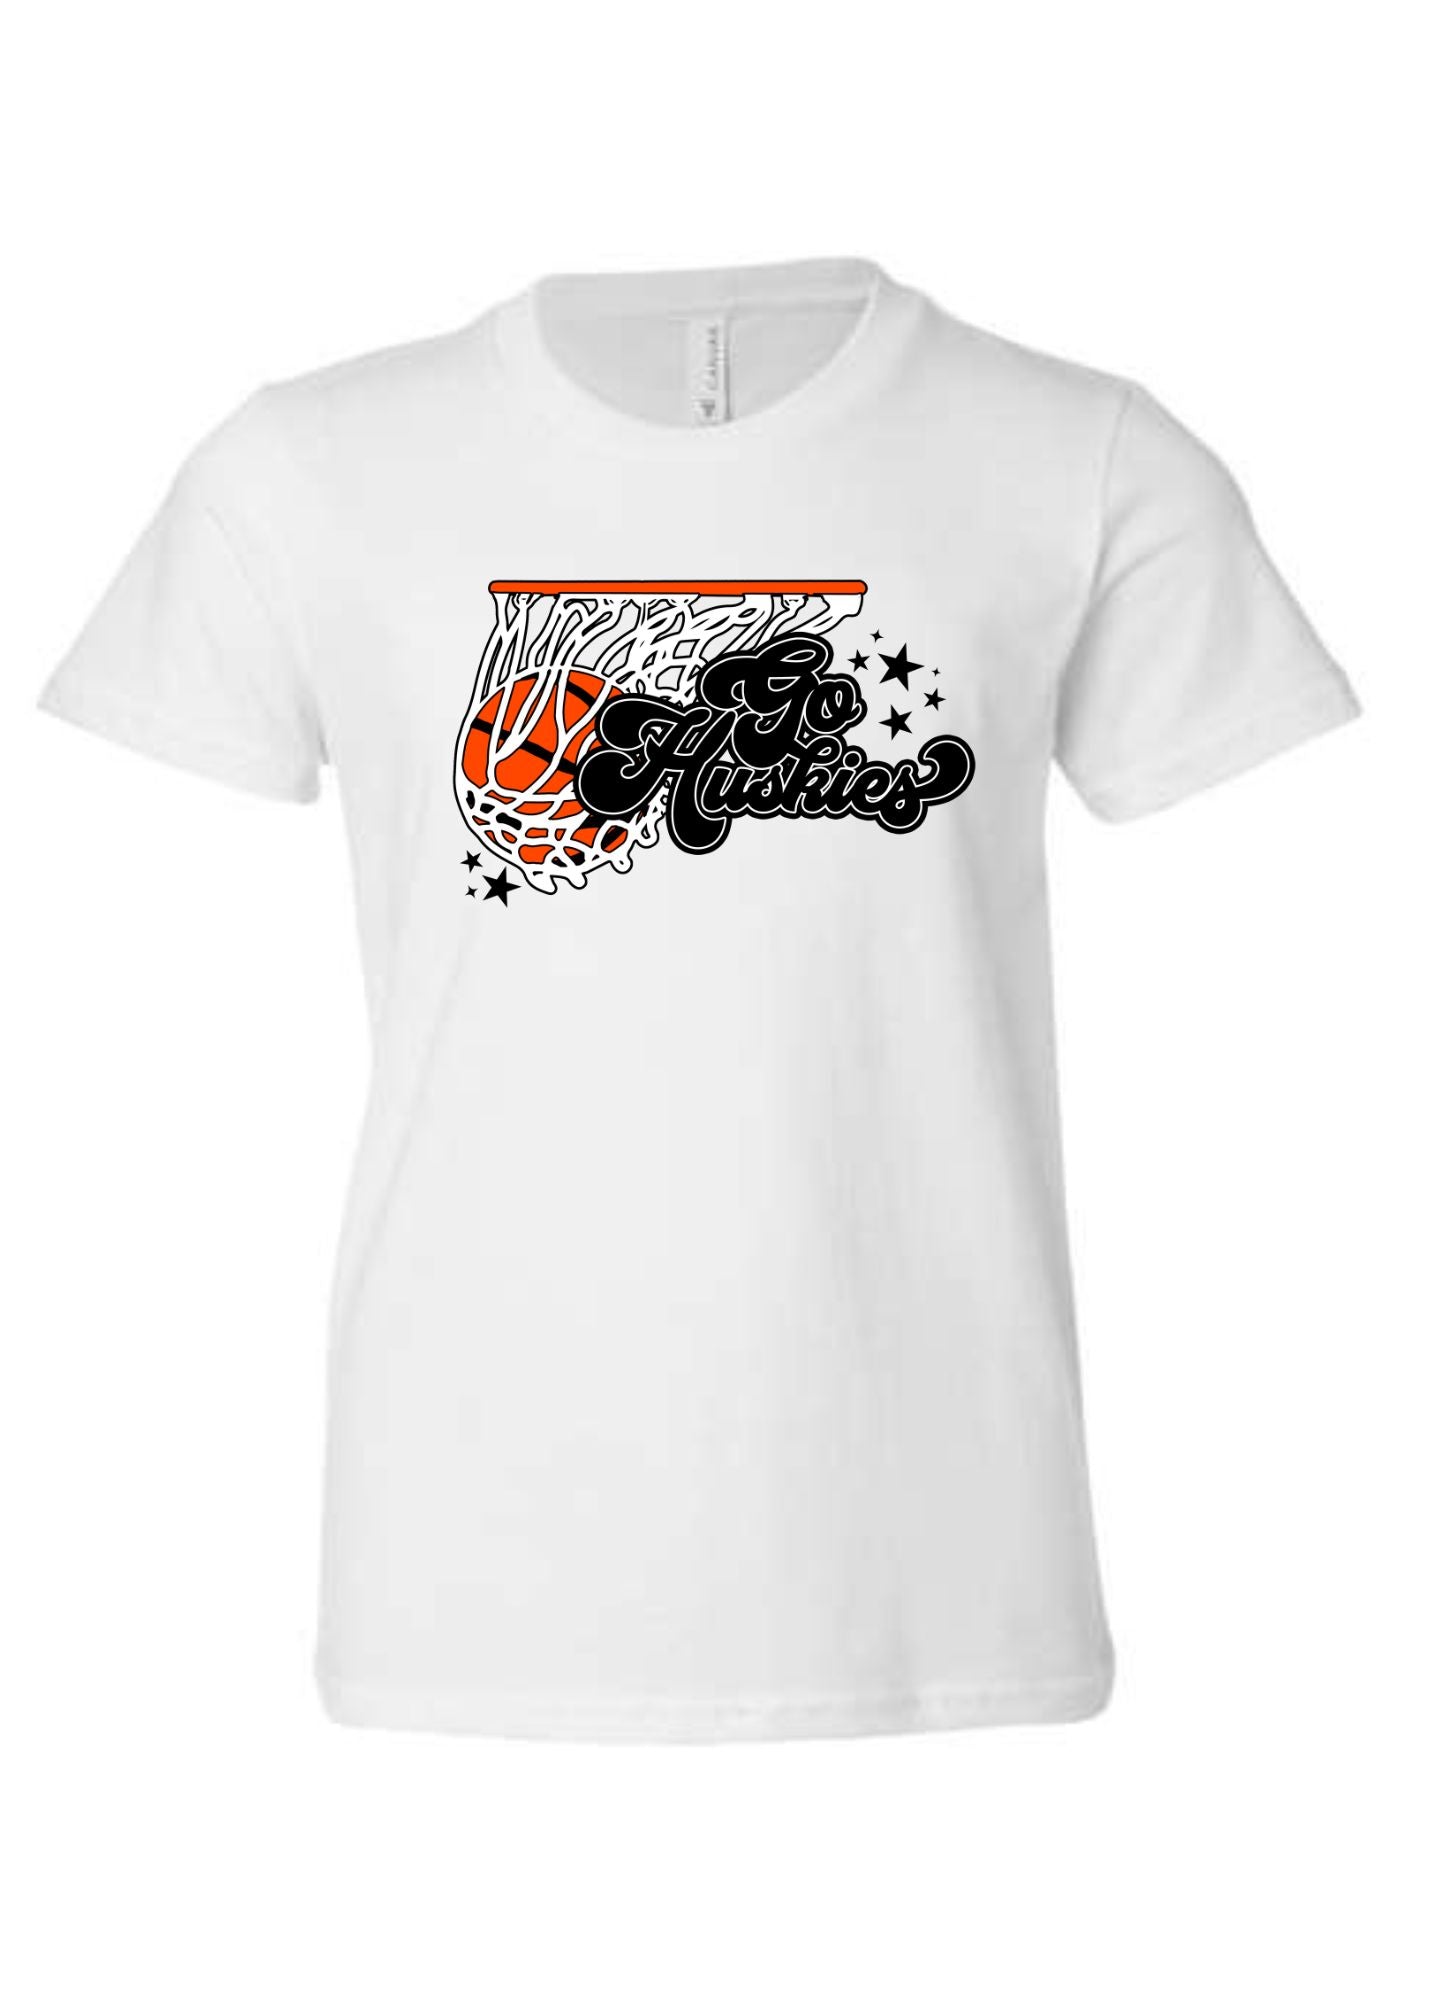 Go Huskies Basketball | Tee | Kids-Sister Shirts-Sister Shirts, Cute & Custom Tees for Mama & Littles in Trussville, Alabama.